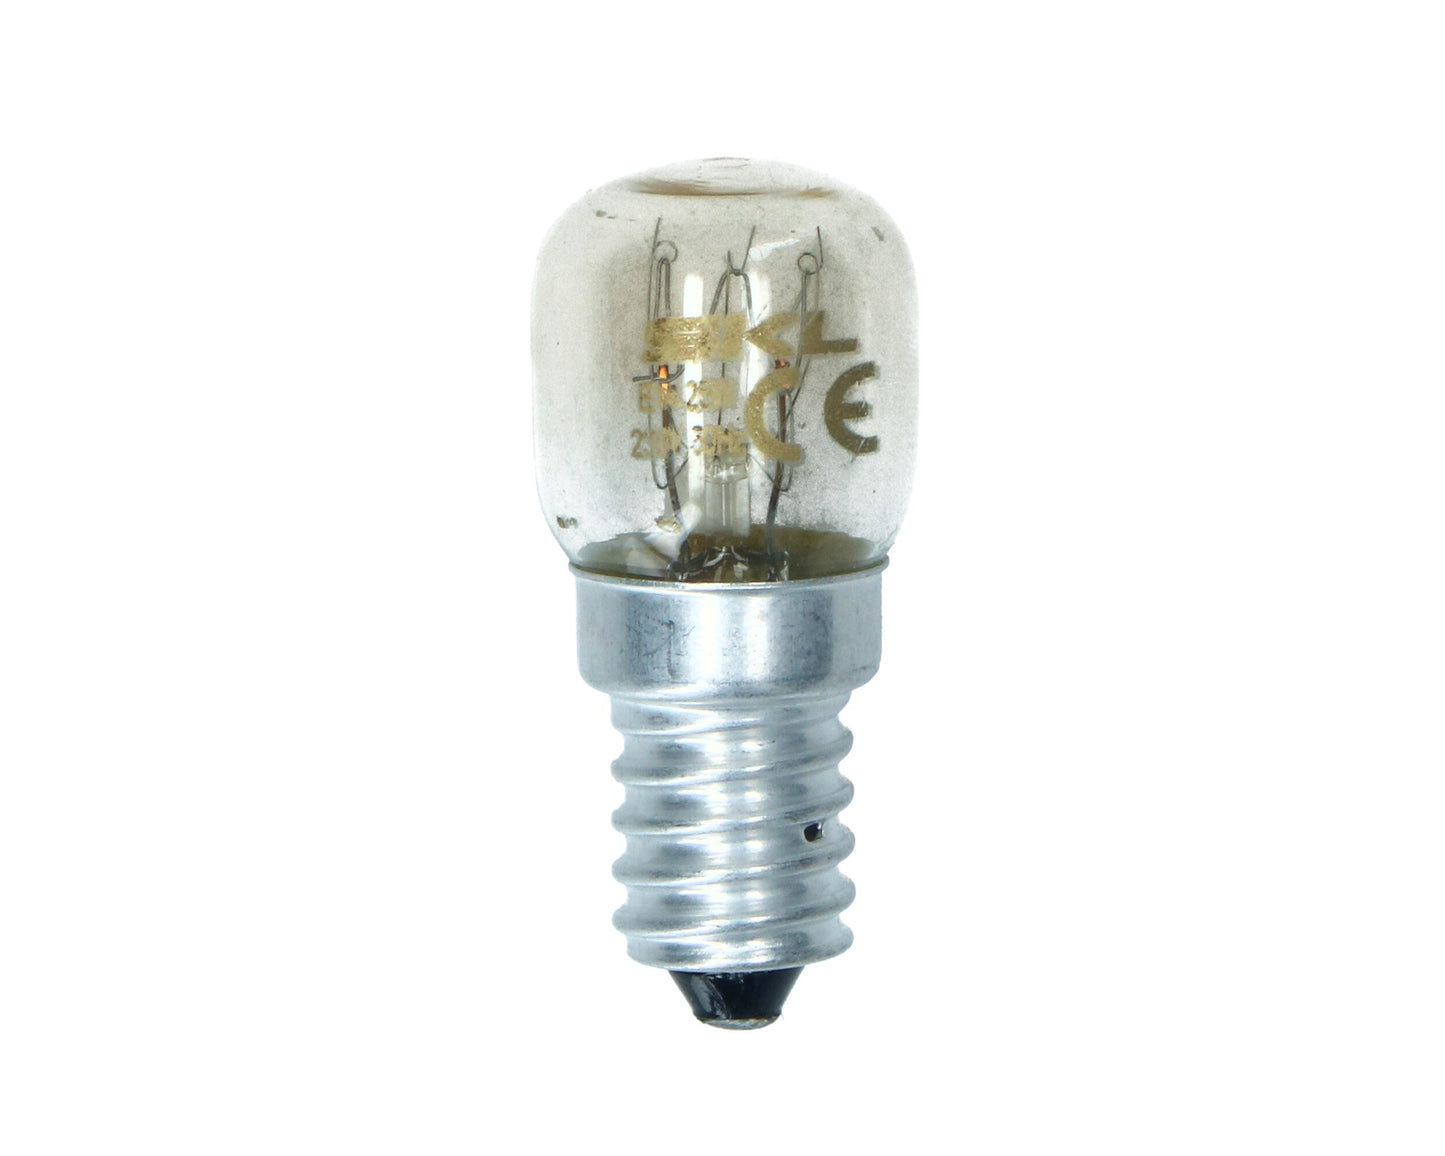 25W 300° Degrees E14 SES Pygmy Oven Cooker Lamp Light Bulb 240v fits Most Cookers - ES1541143, ES654985